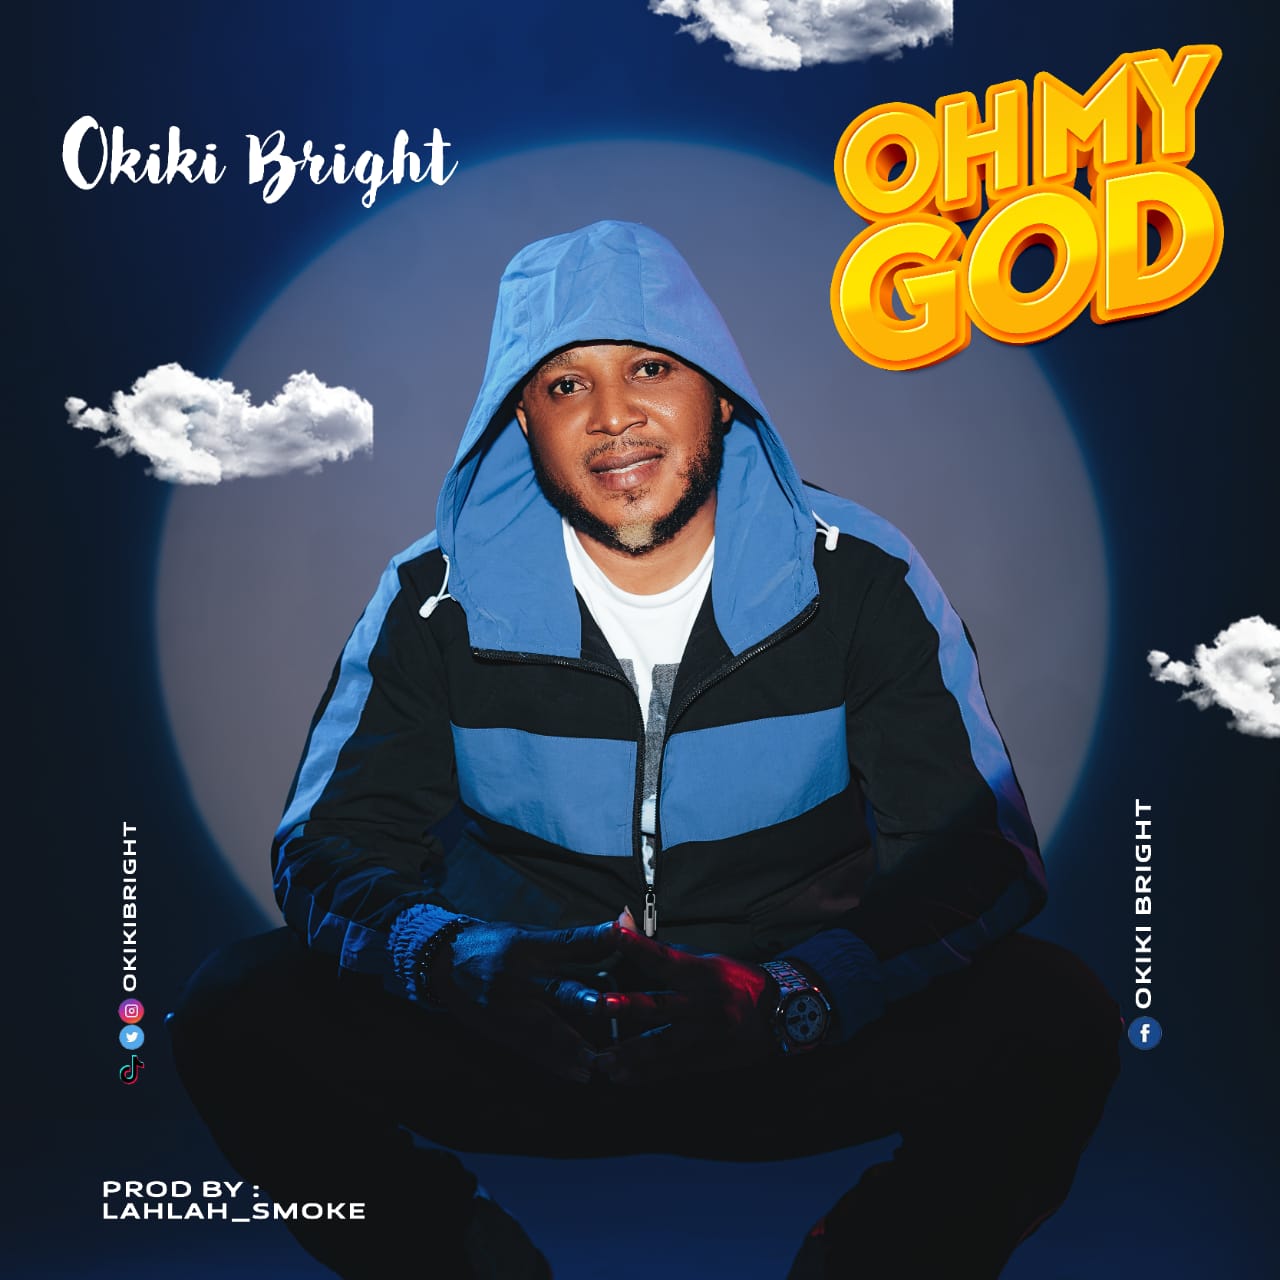 Fuji Pop Artiste Okiki Bright Releases New Single 'Oh My God'